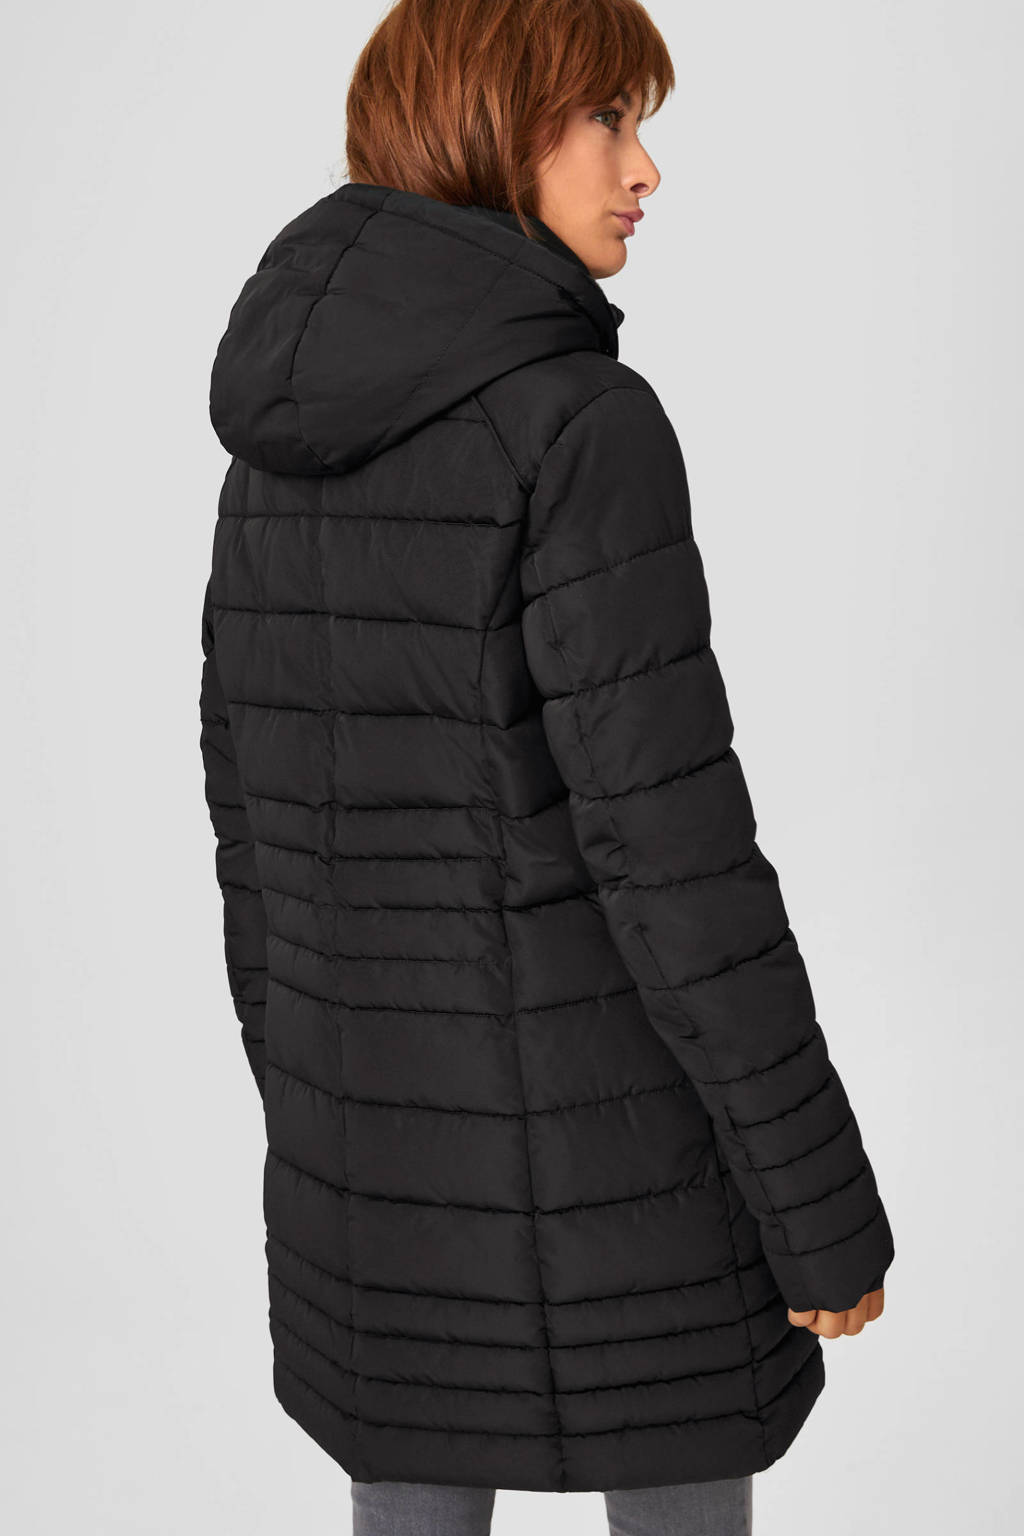 Regulatie Bijlage Asser C&A The Outerwear gewatteerde jas zwart | wehkamp